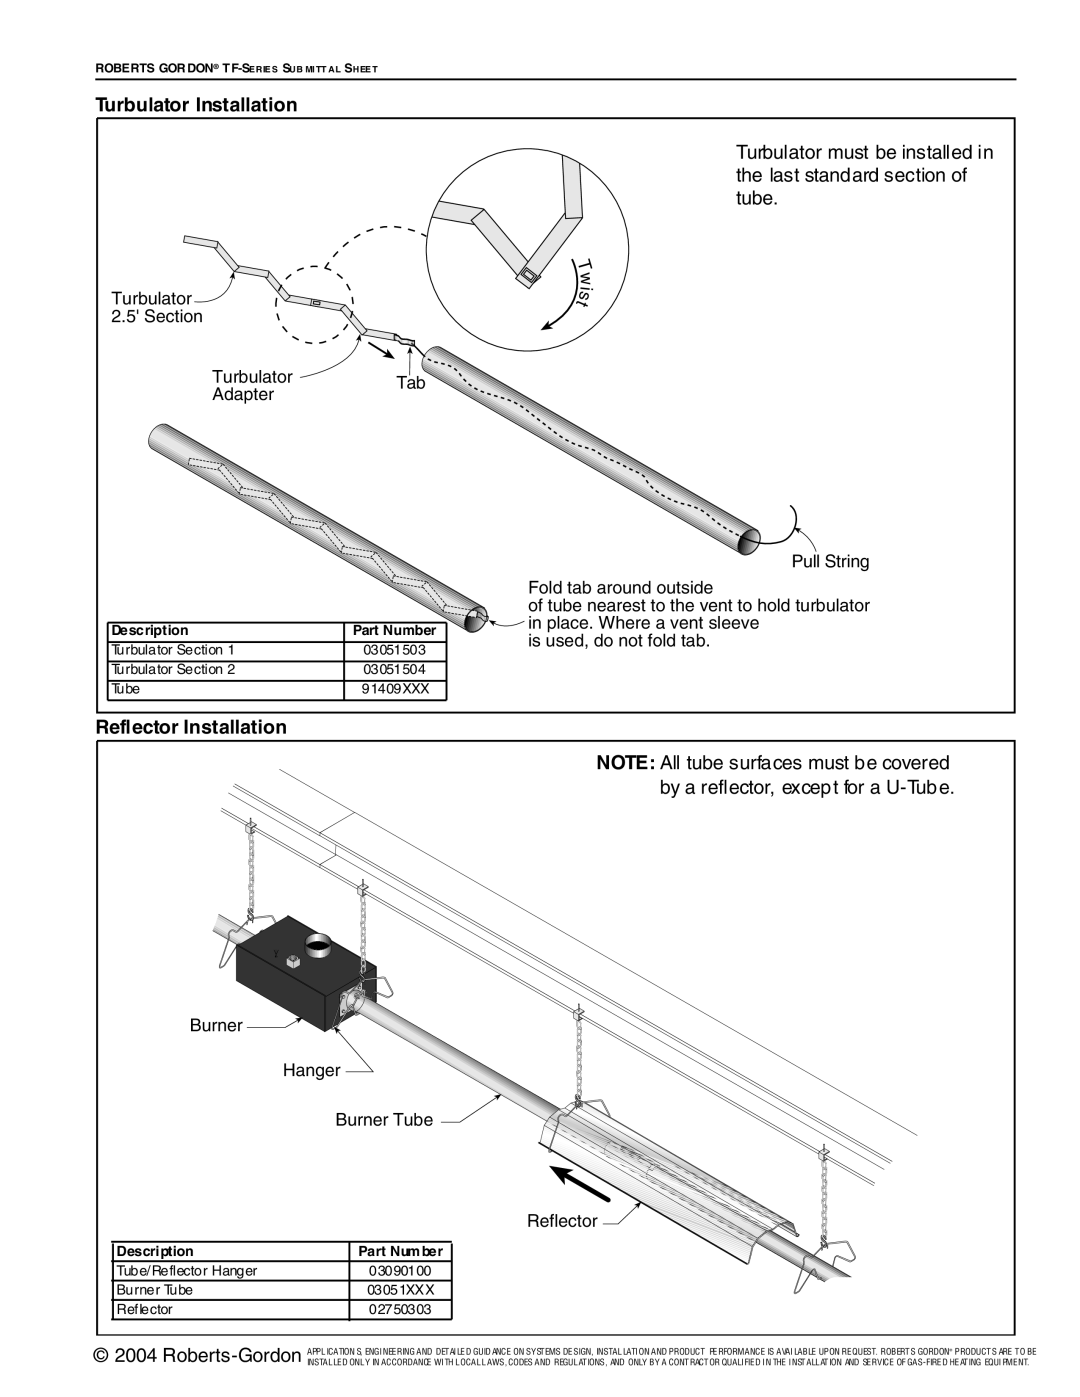 Roberts Gorden TF-Series service manual Turbulator Installation, Reflector Installation 